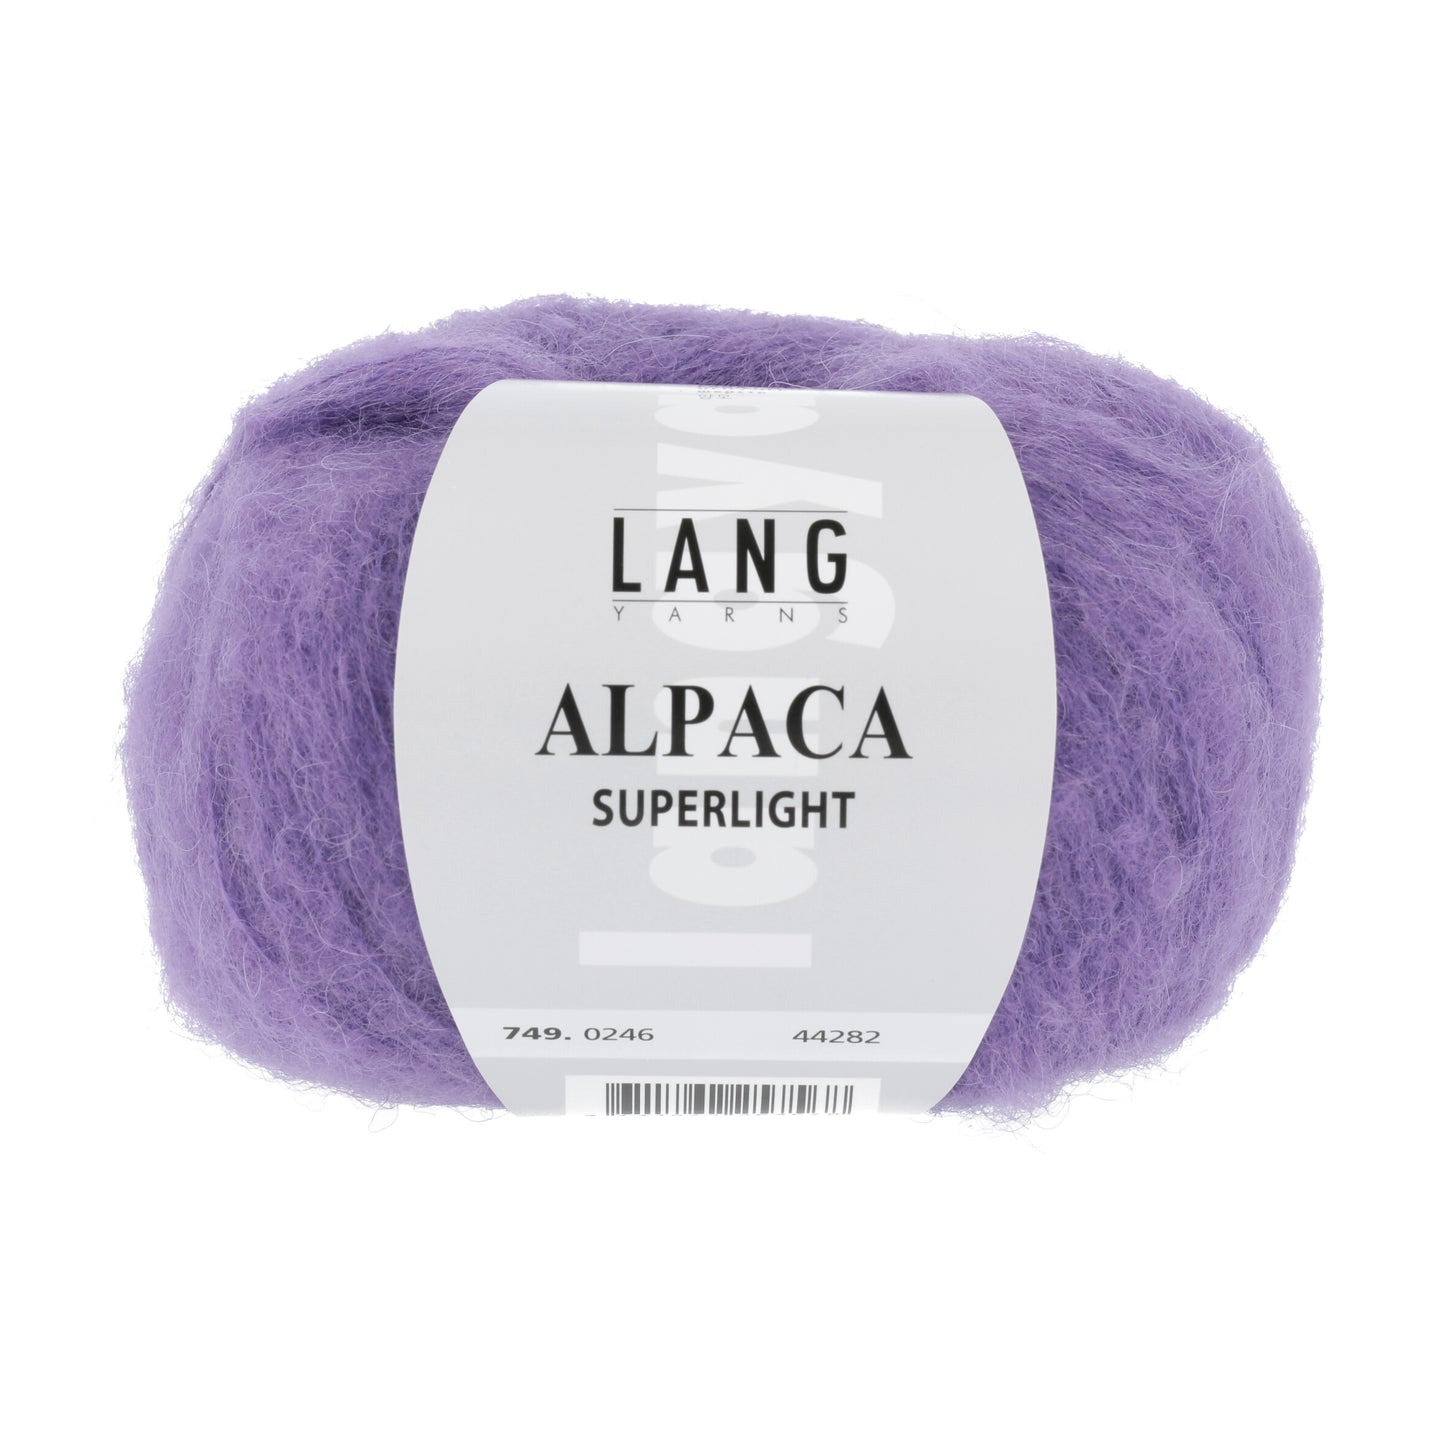 Lang Yarns Alpaca Superlicht / 749.0246